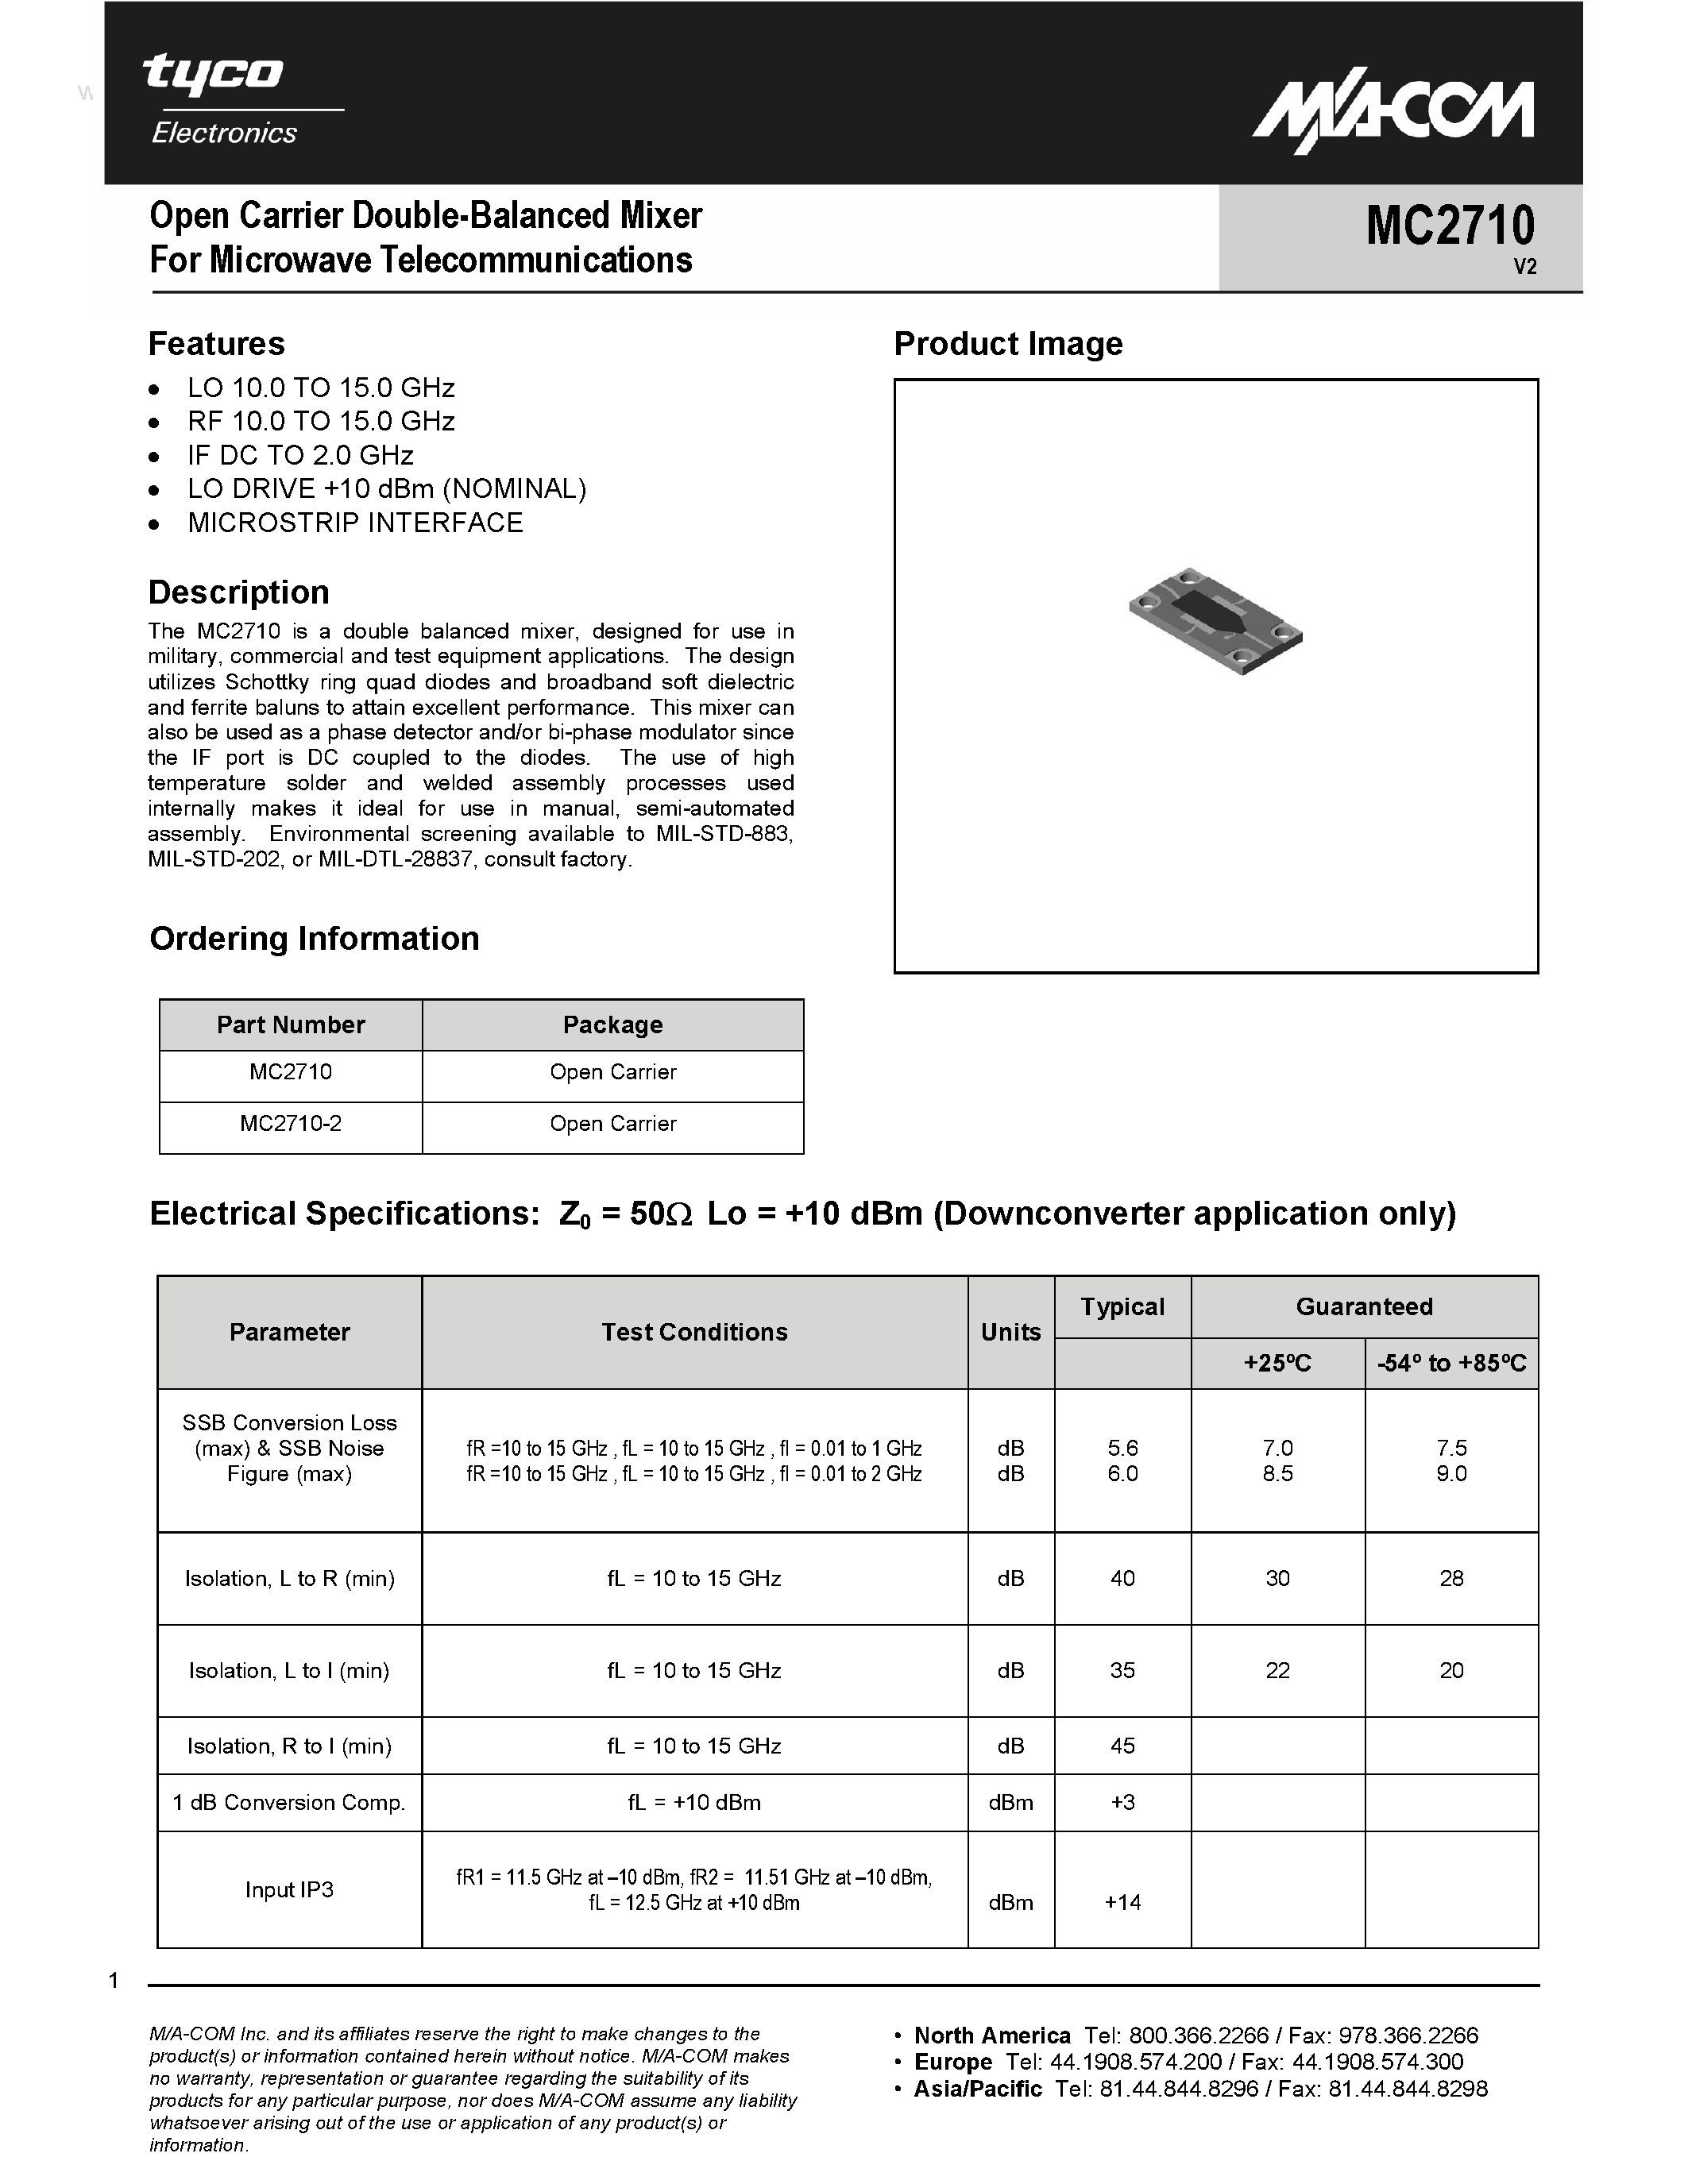 Datasheet MC2710 - Open Carrier Double-Balanced Mixer page 1